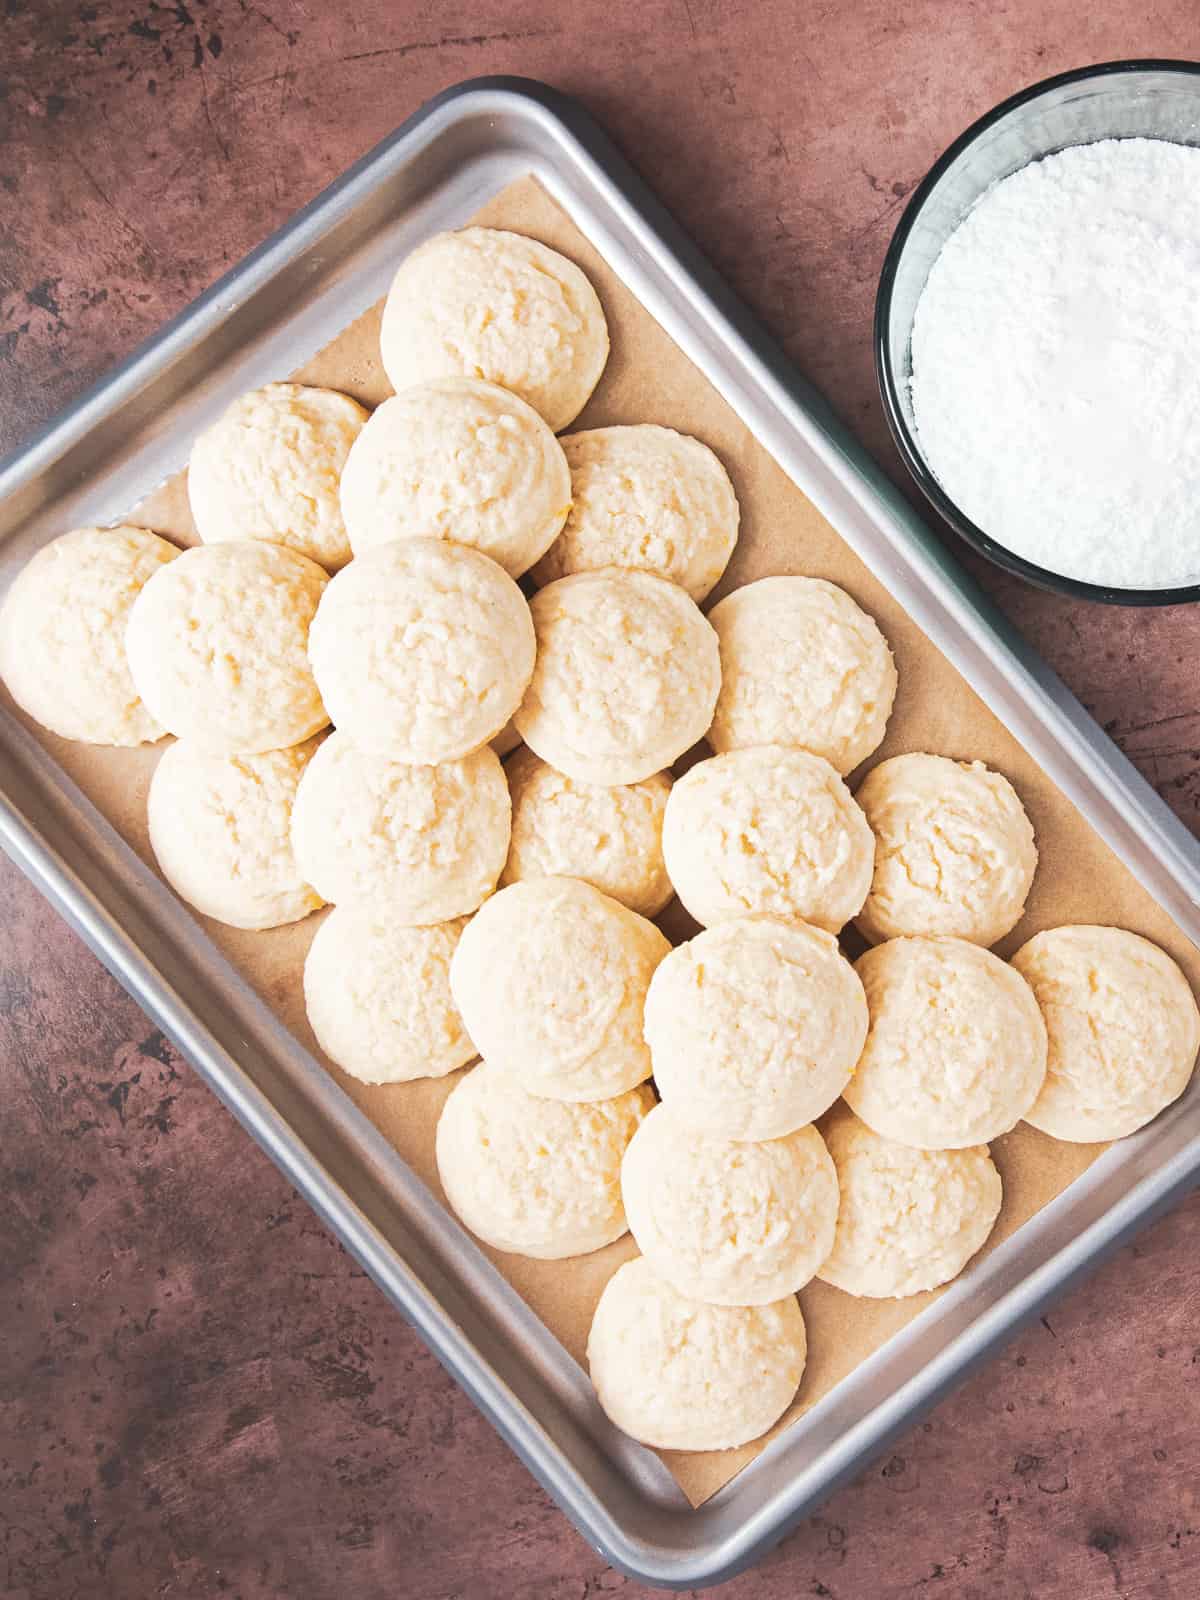 fresh baked lemon cooler cookies in a baking sheet.